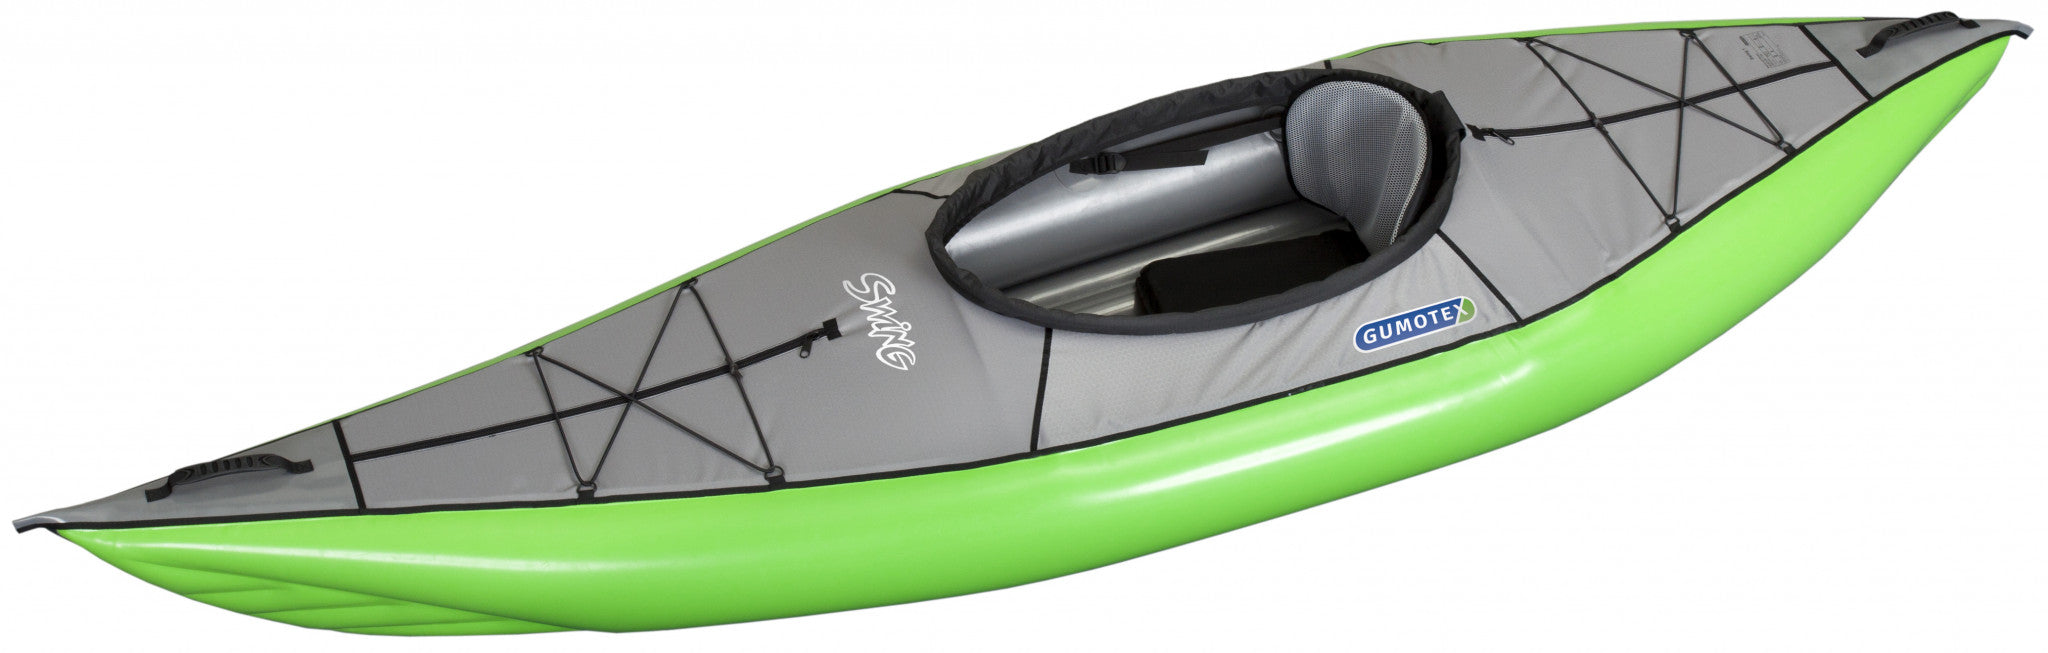 Gumotex Swing 1 Inflatable Kayak in Lime 